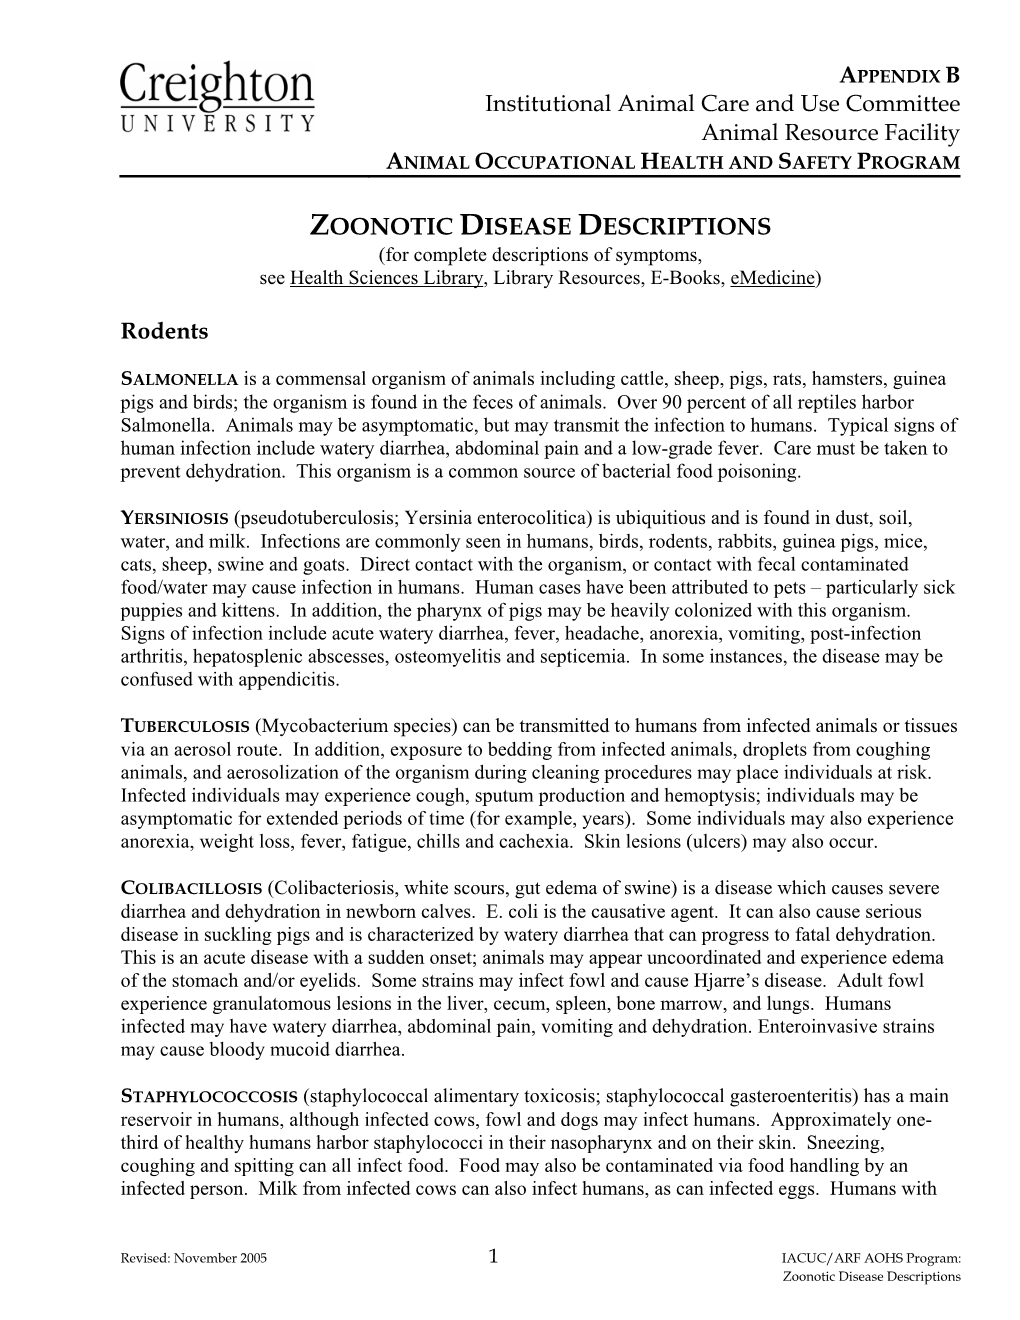 ZOONOTIC DISEASE DESCRIPTIONS (For Complete Descriptions of Symptoms, See Health Sciences Library, Library Resources, E-Books, Emedicine)